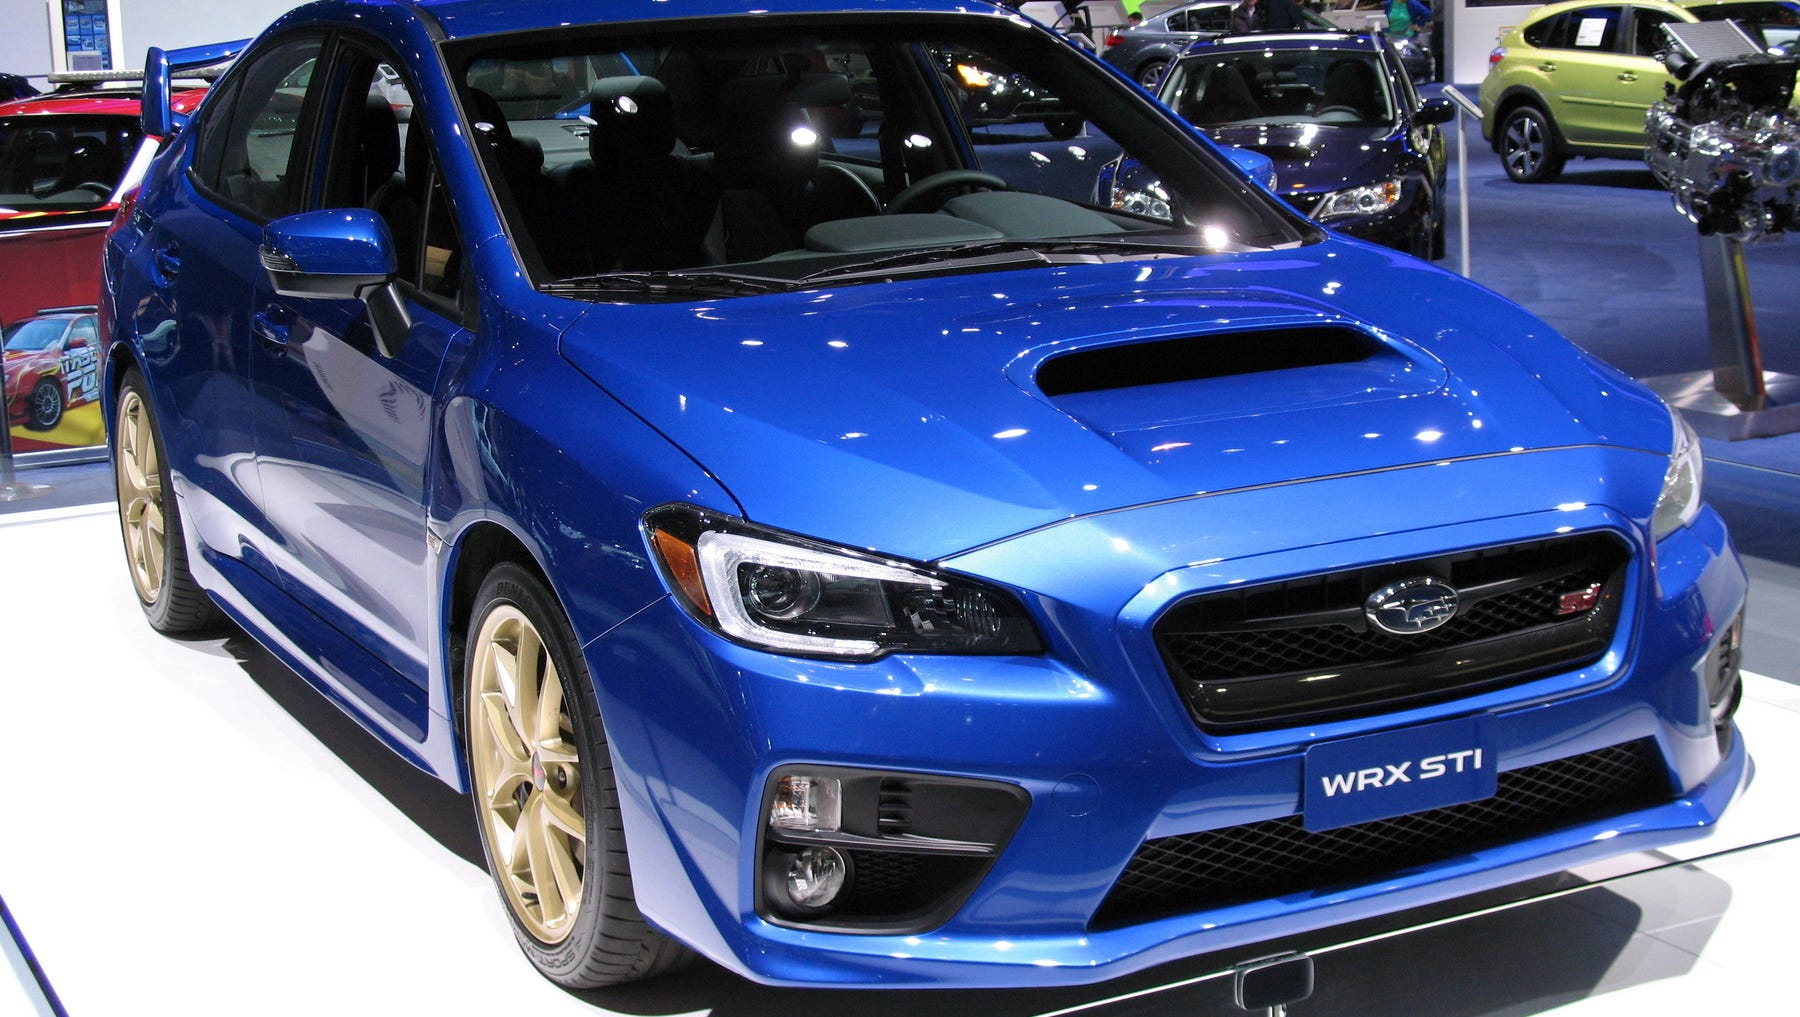 2016 Subaru WRX STI is iconic performance flagship